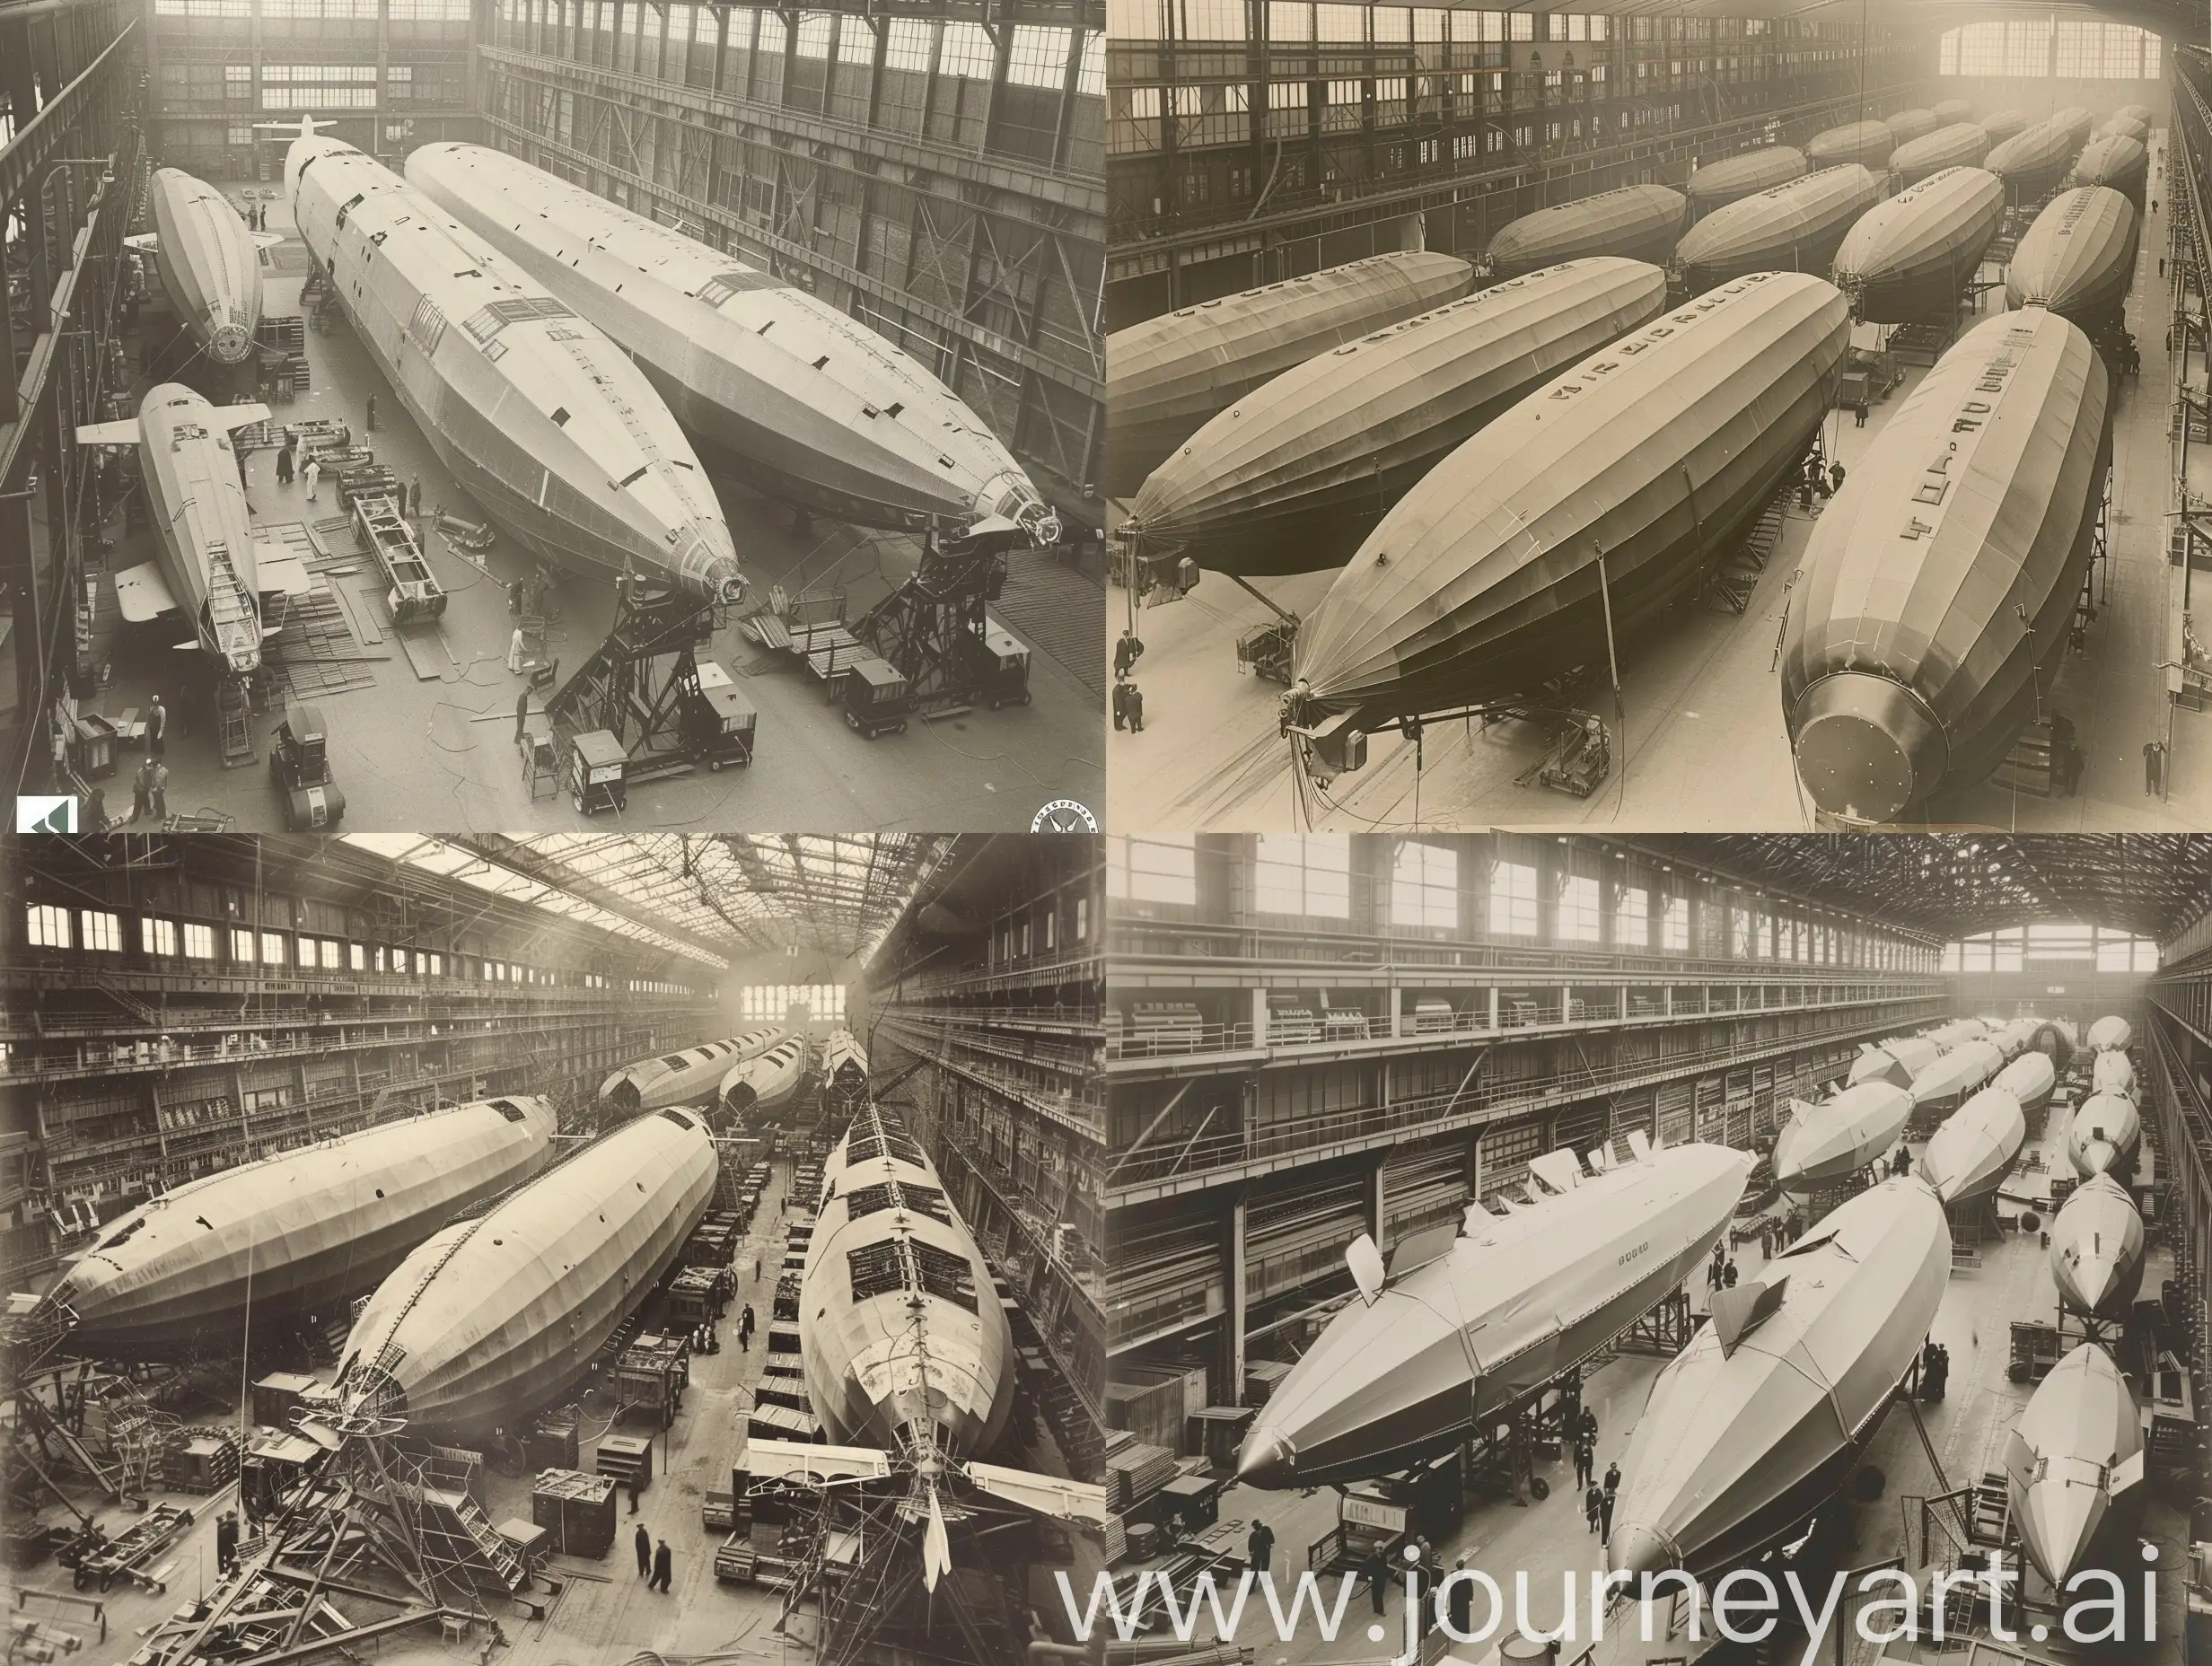 1933-Old-Photo-Assembling-Airship-Parts-in-Large-Hangarlike-Factory